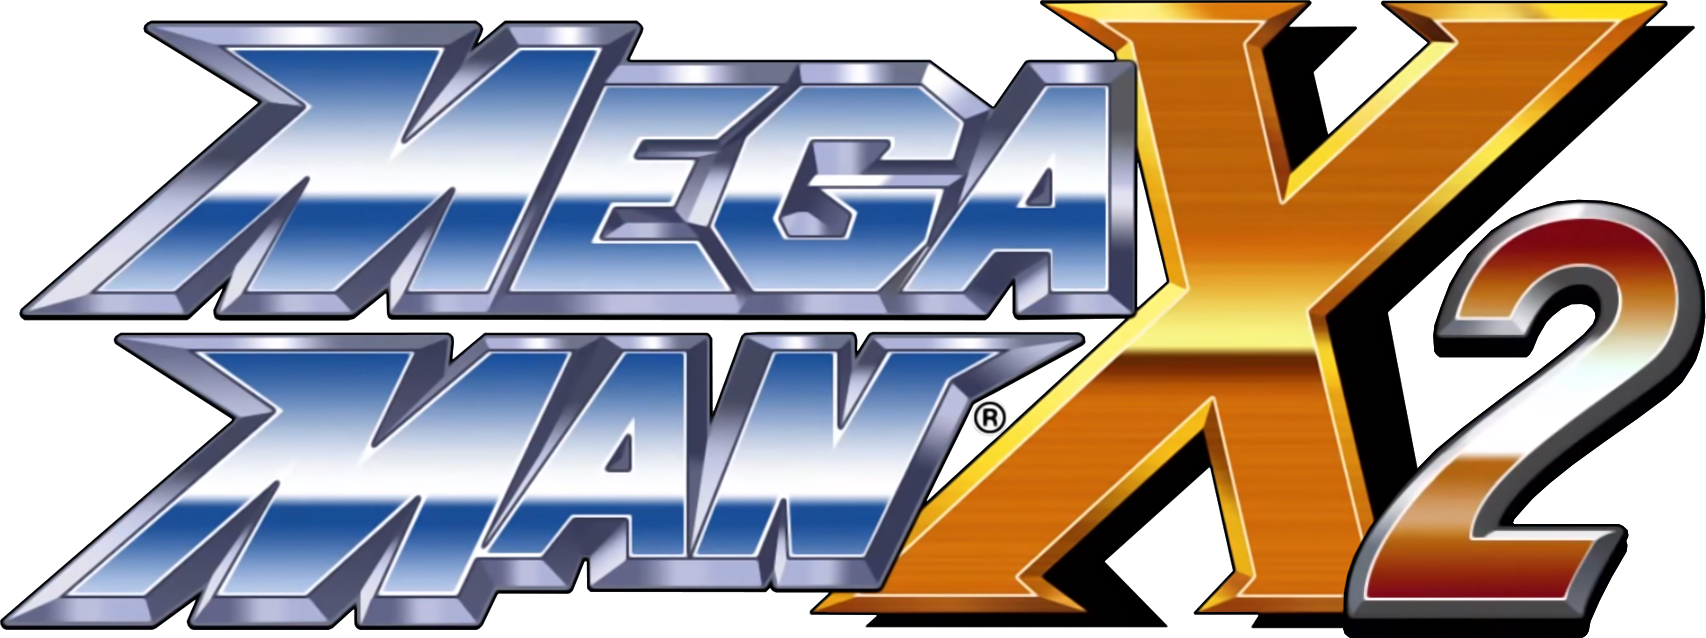 Mega Man X2 Details - LaunchBox Games Database